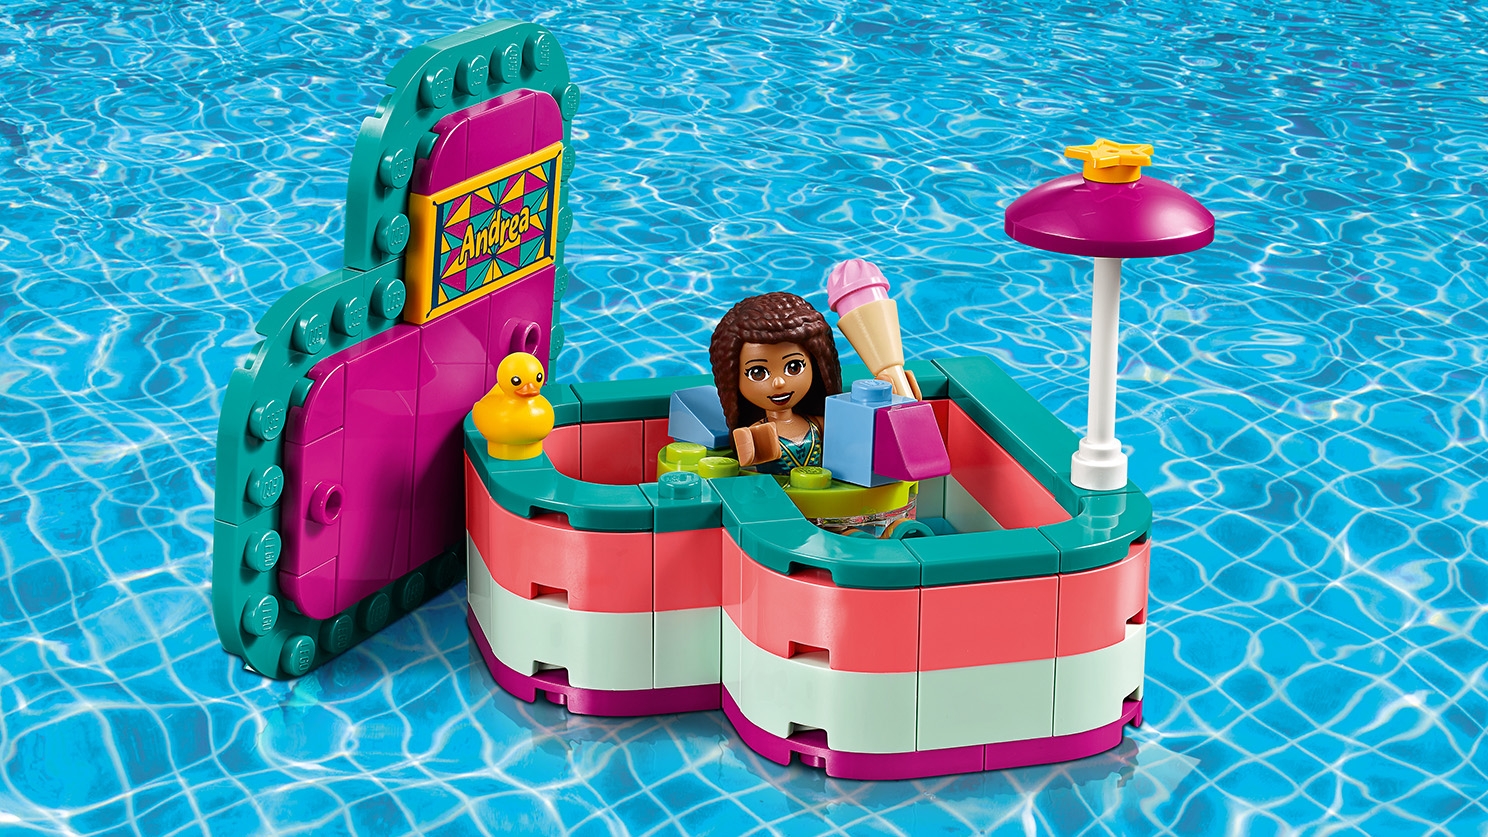 New Toy LEGO® Friends Andrea/'s Summer Heart Box 41384 Brick